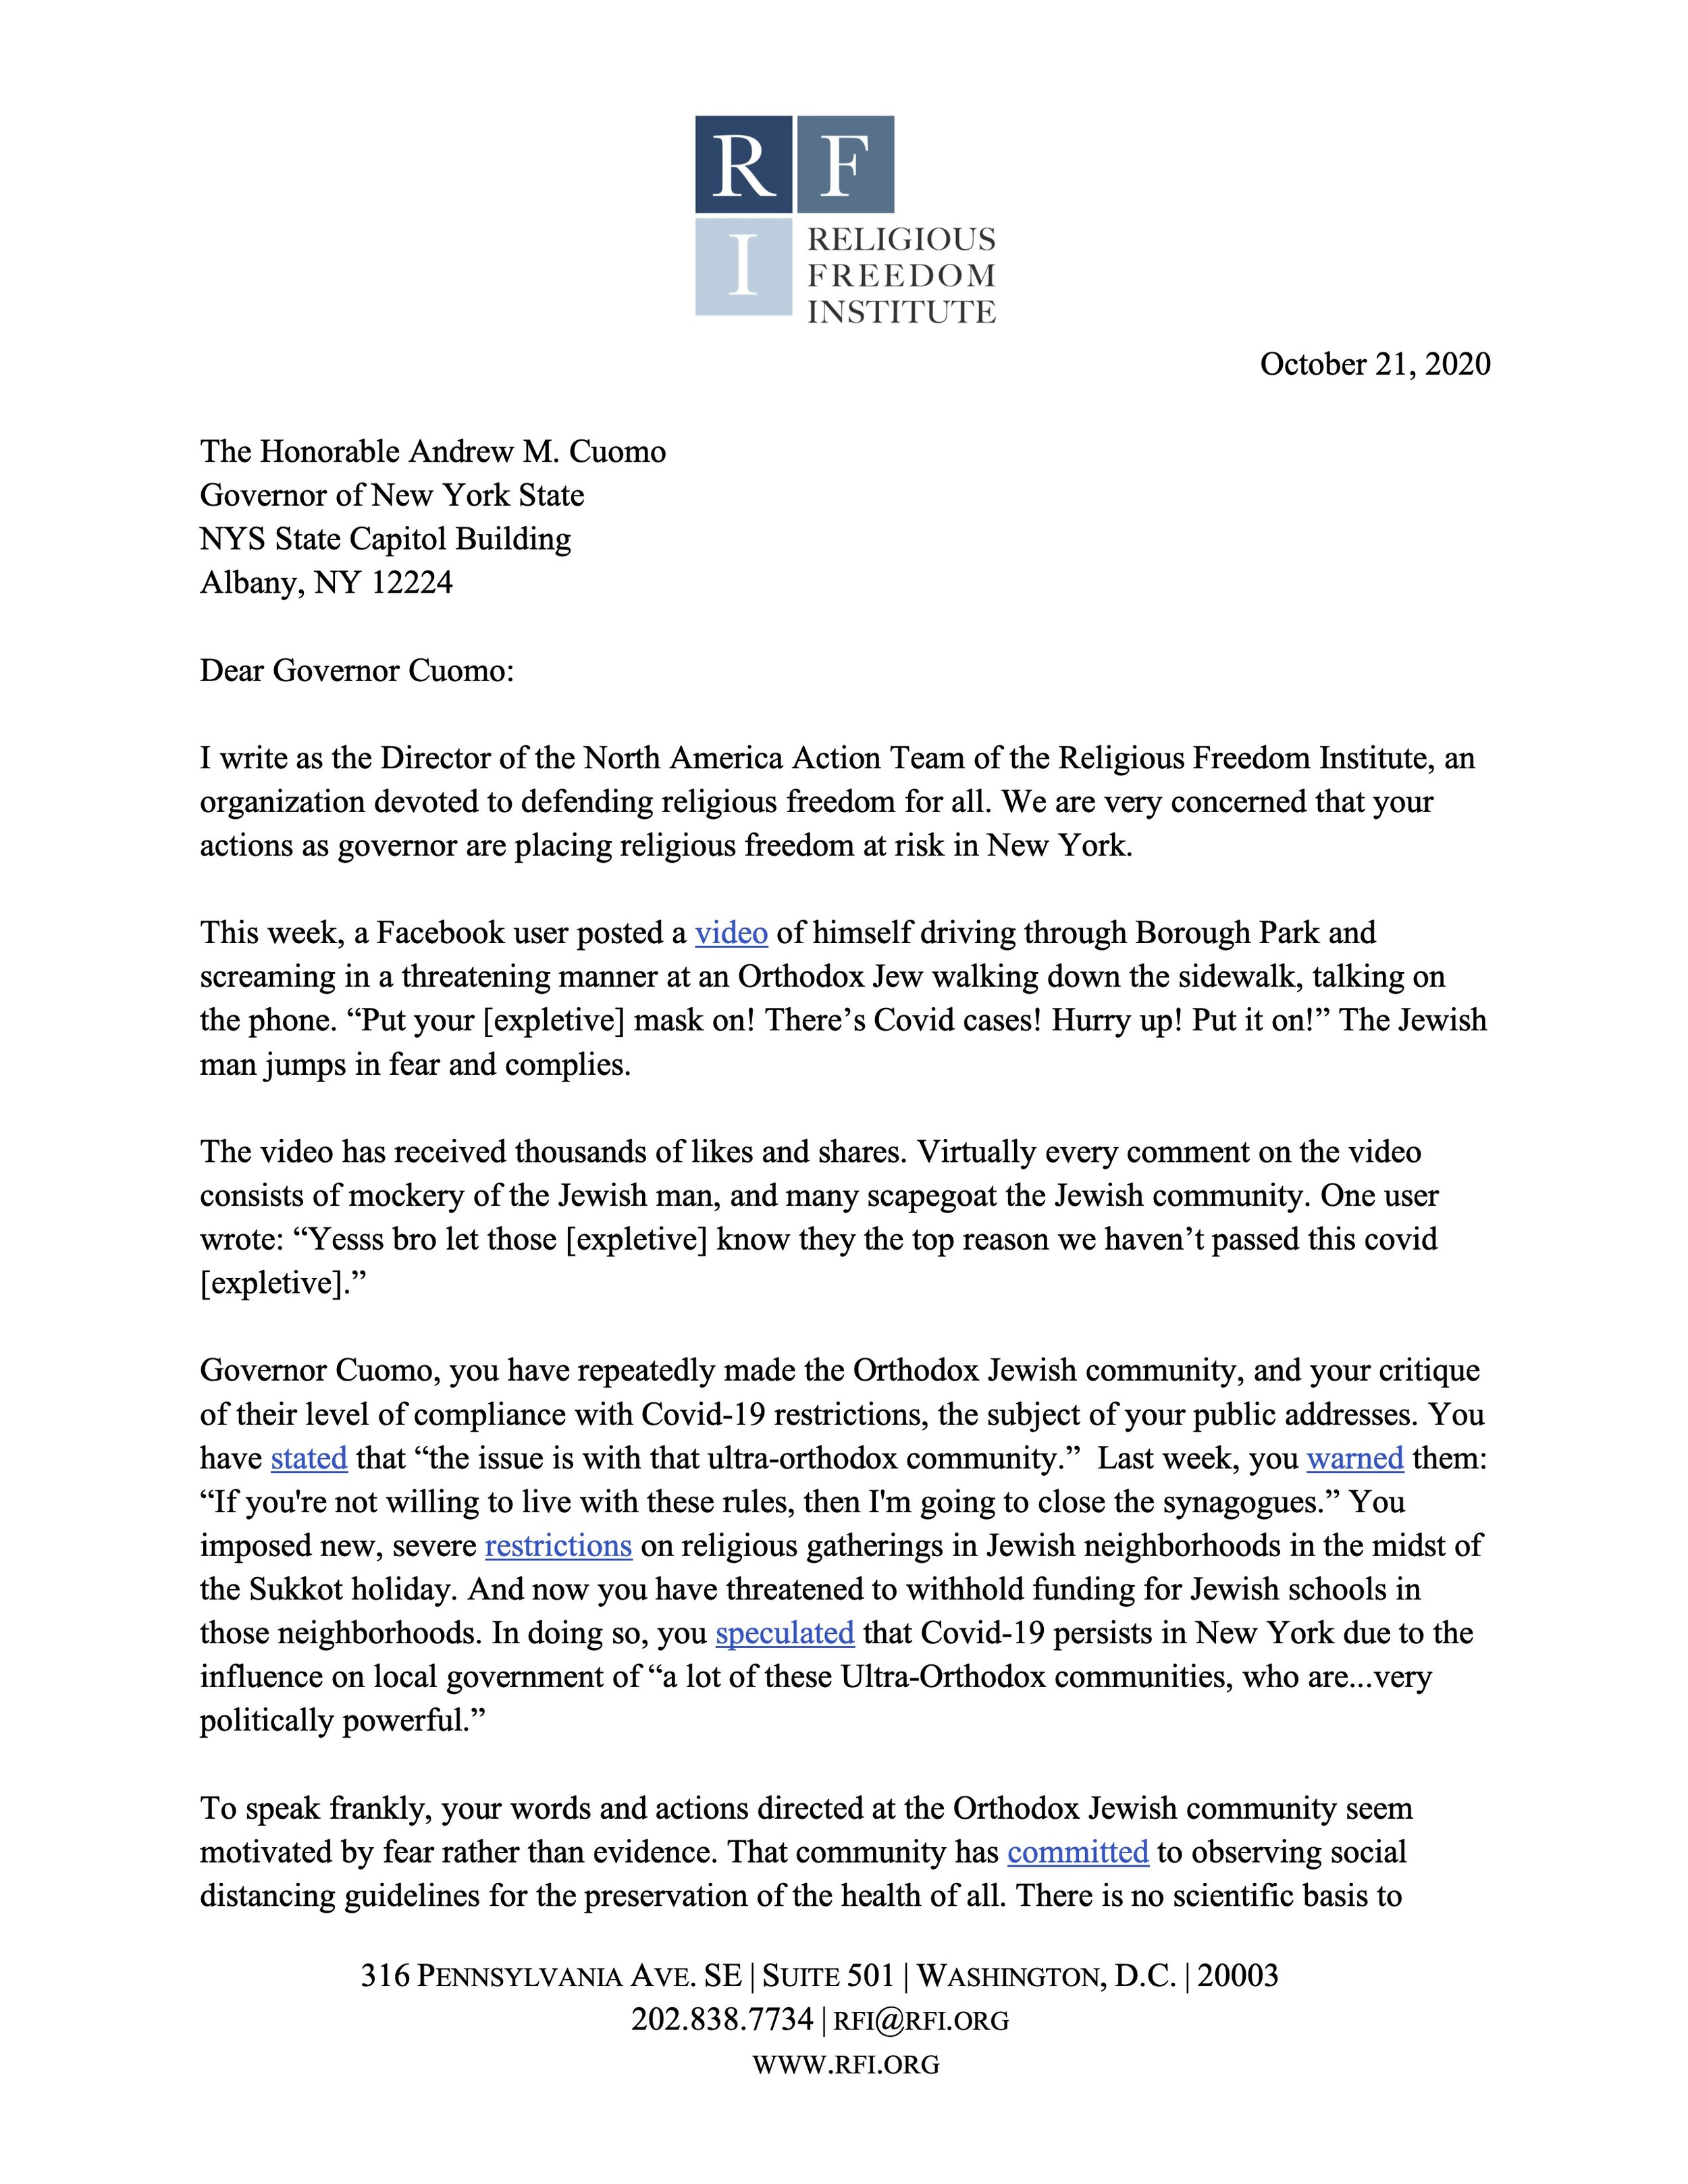 RFI Open Letter to NY Gov. Cuomo - FINAL.jpg